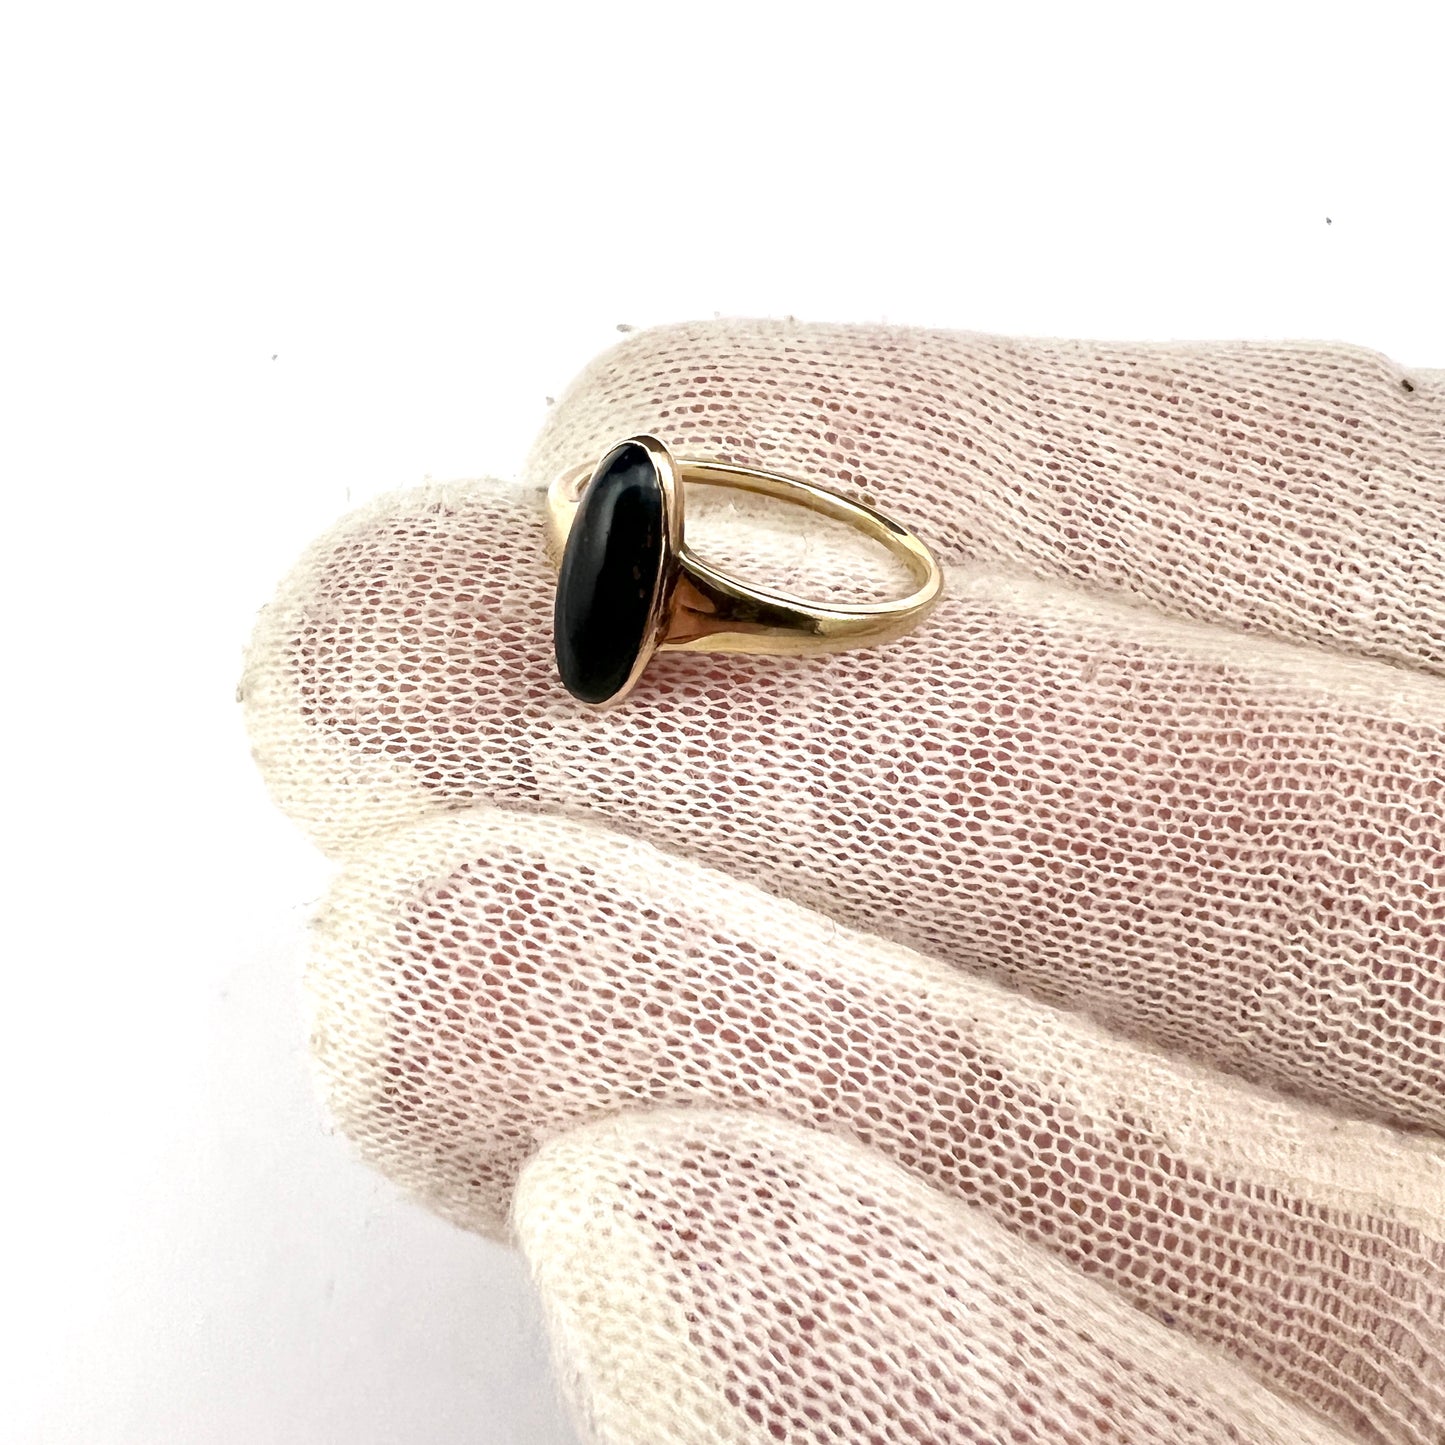 Antique 14k Gold Bloodstone Ring. Probably Denmark.